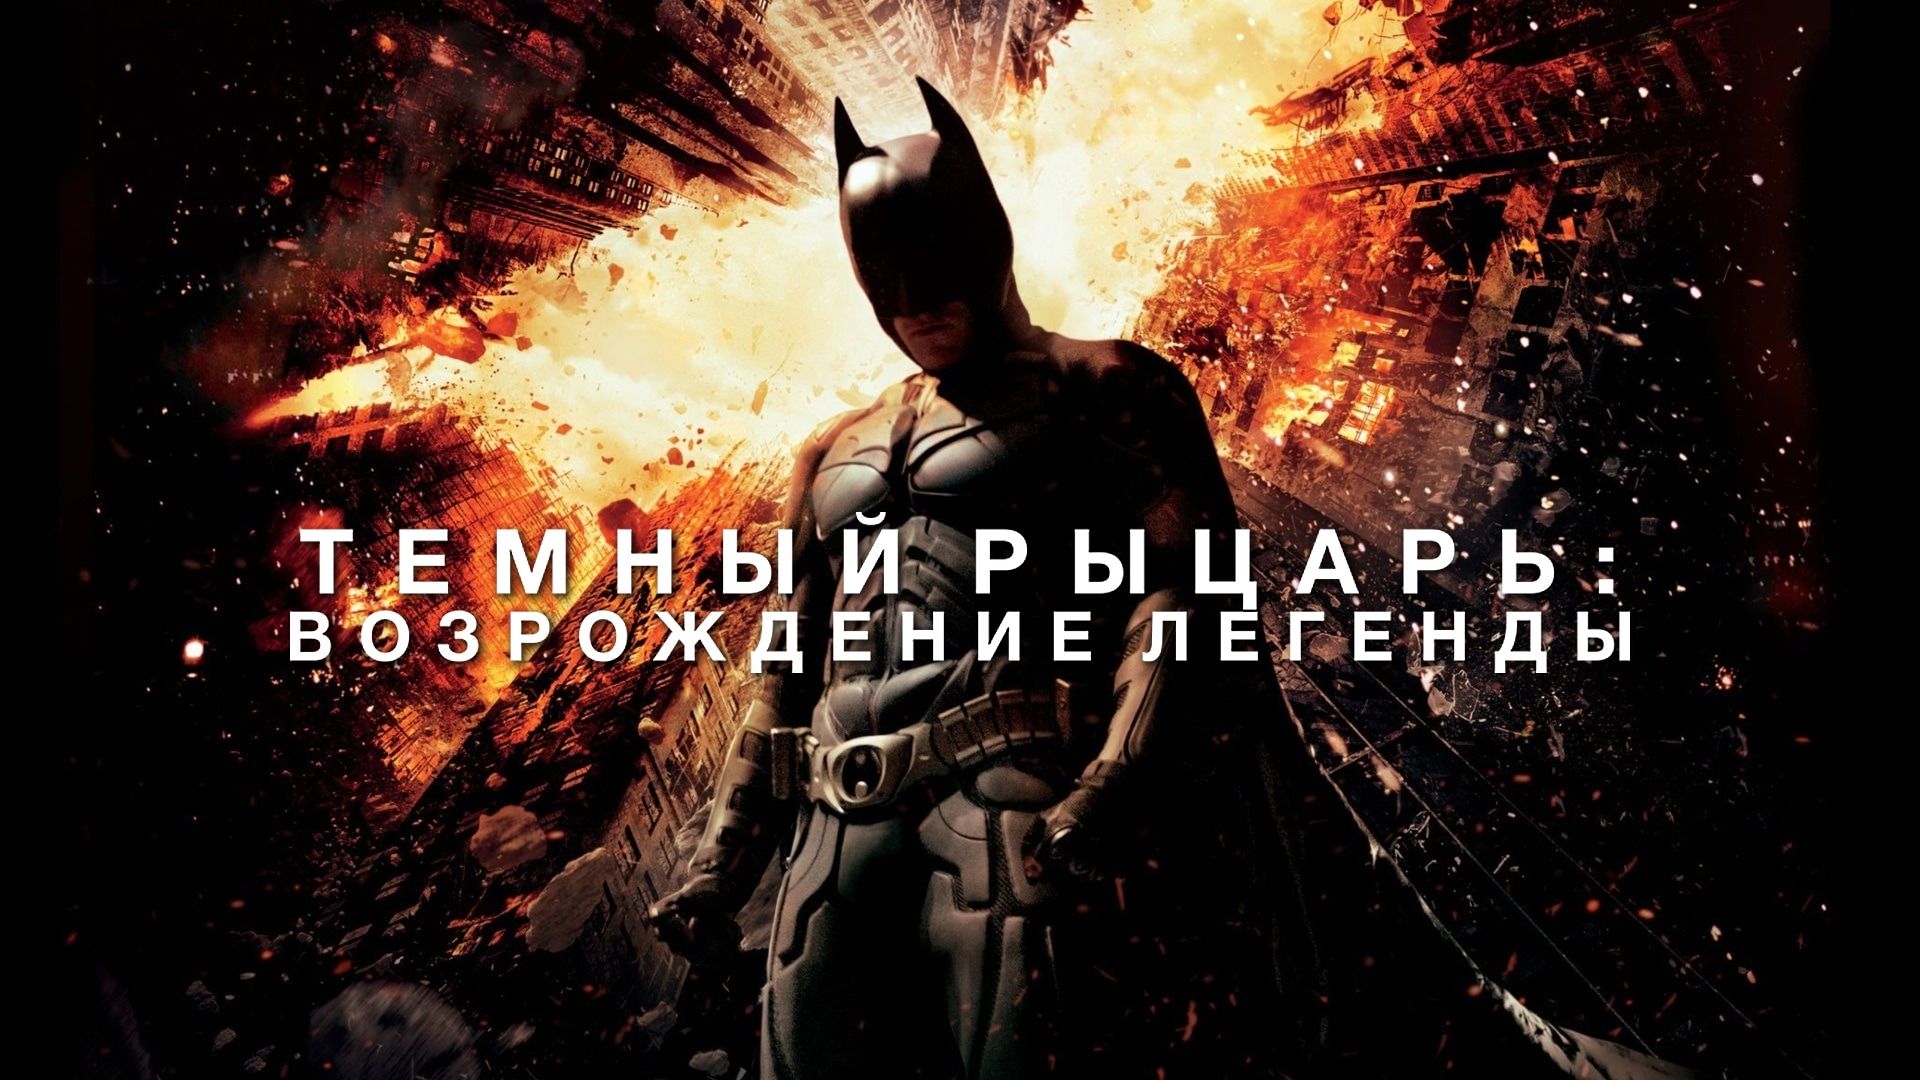 Темный рыцарь: Возрождение легенды | The Dark Knight Rises (2012)